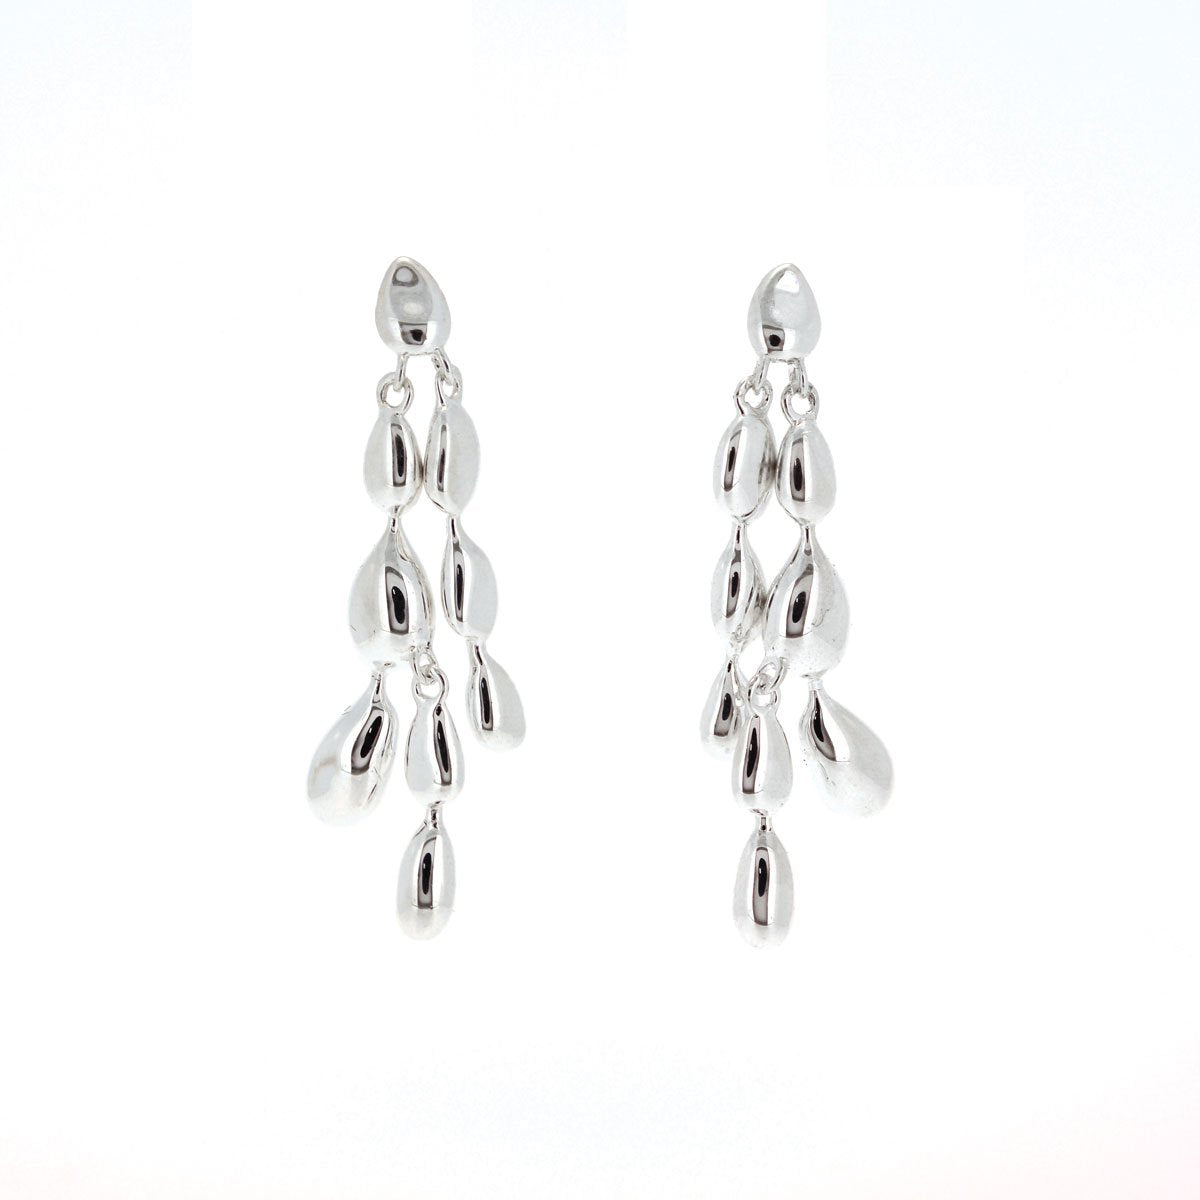 Linda Tahija Neptune's Earrings, Silver